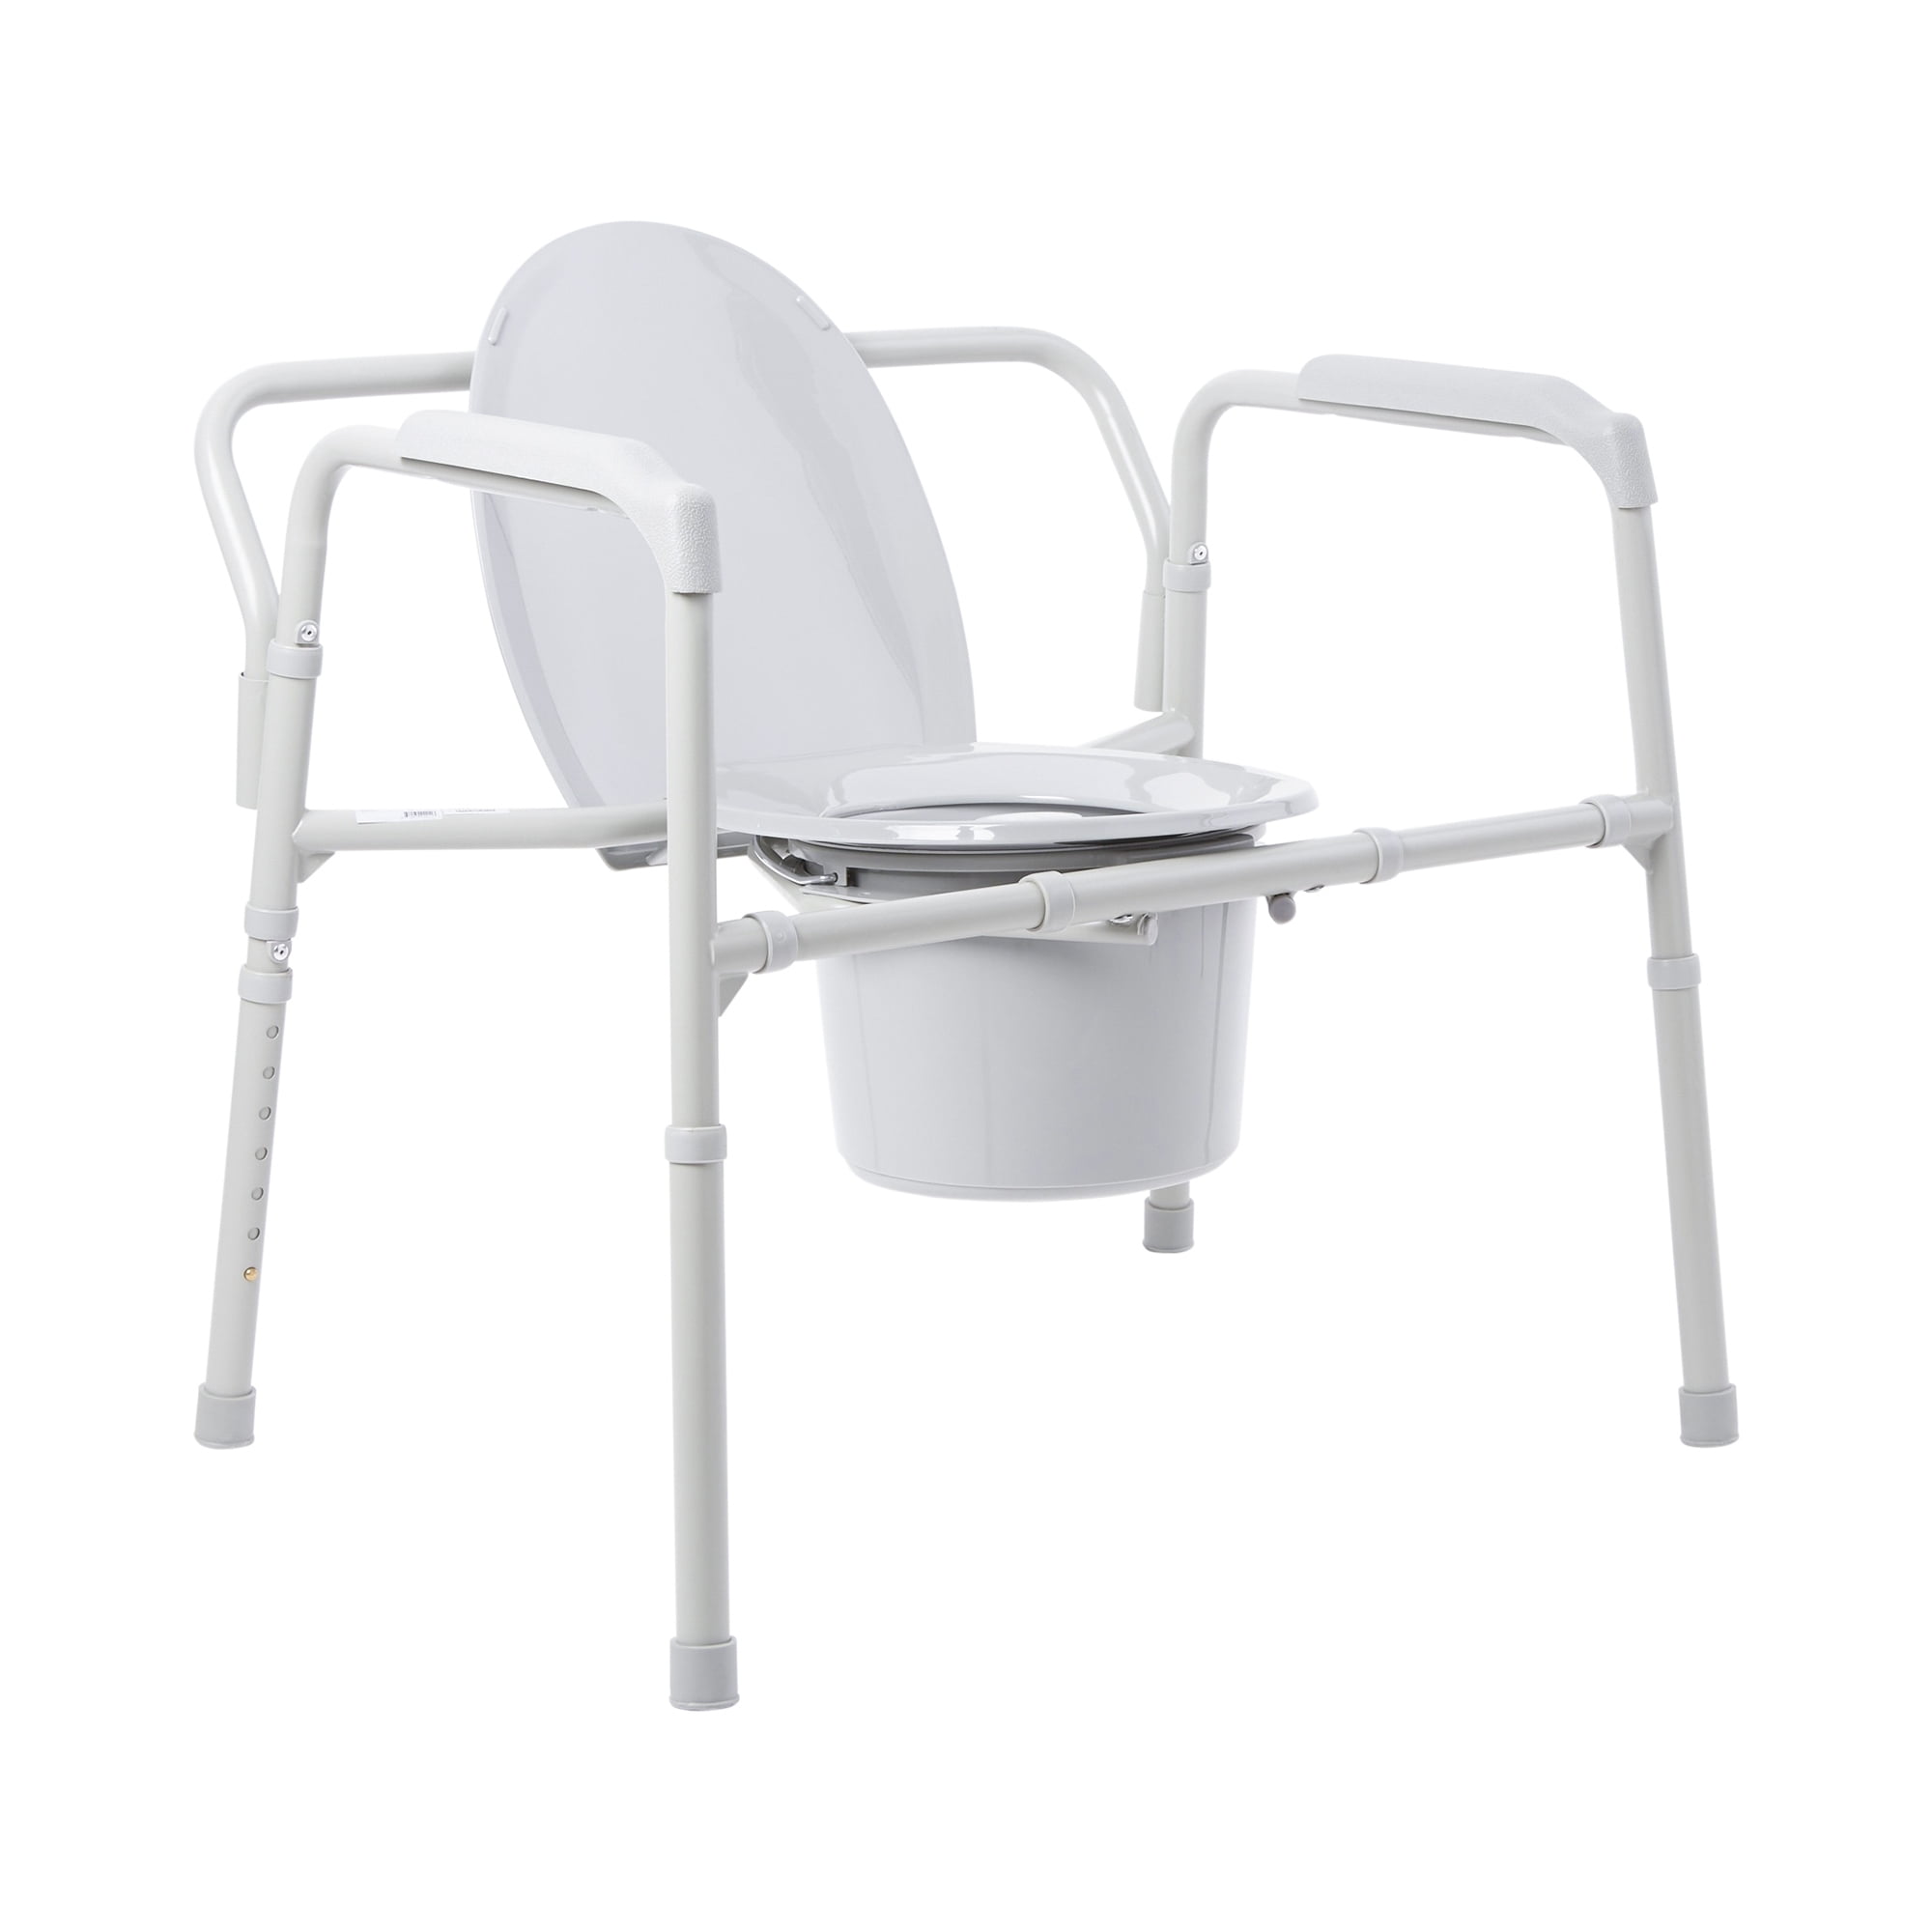 McKesson Bariatric Commode Chair